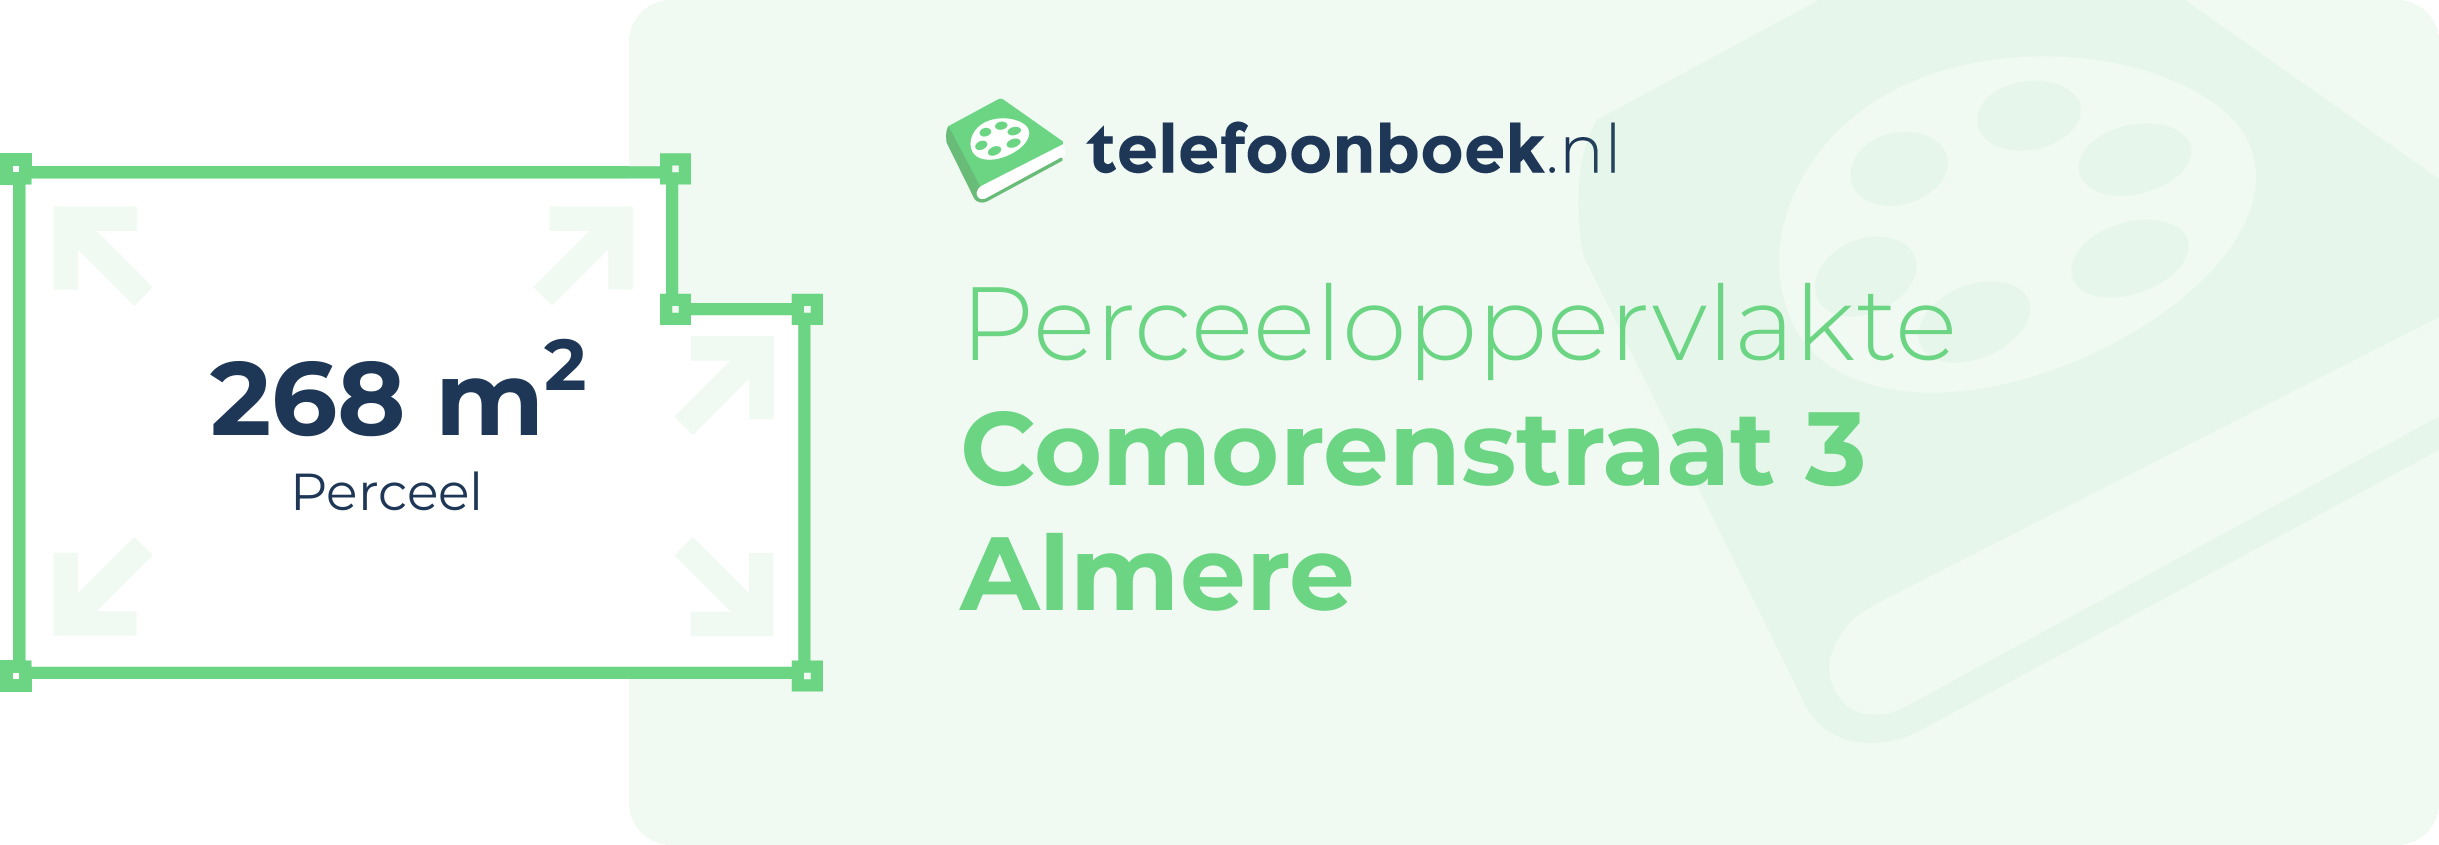 Perceeloppervlakte Comorenstraat 3 Almere